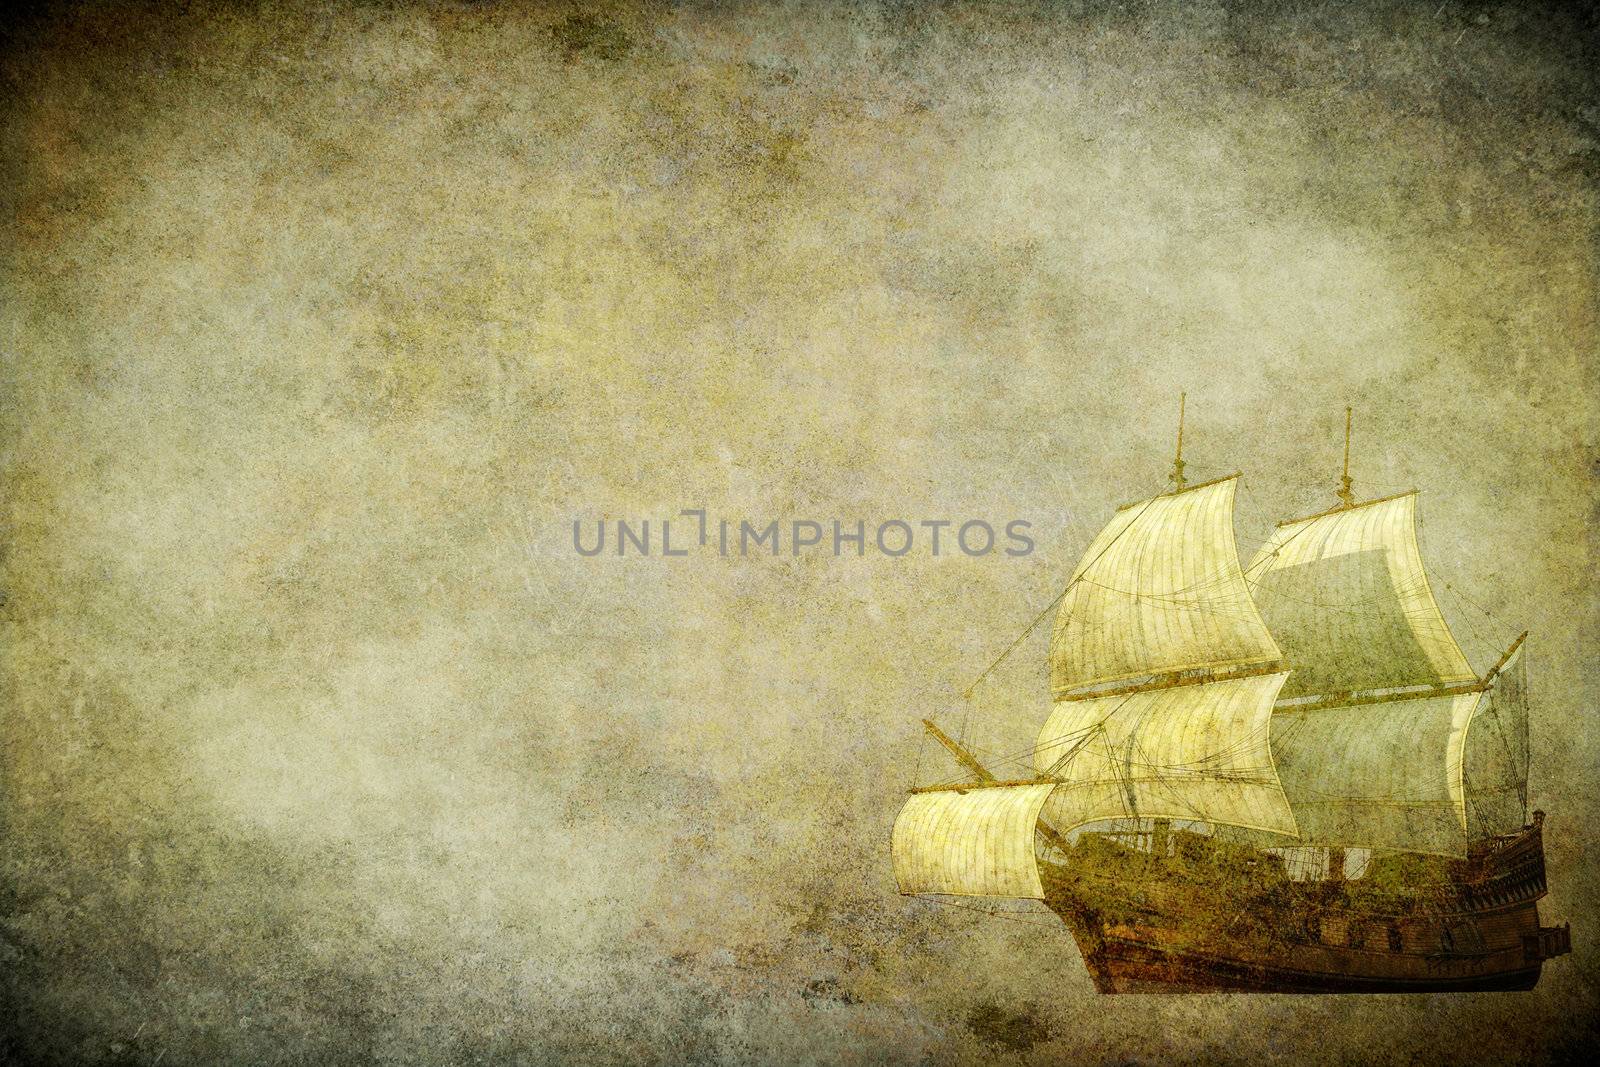 Sailing ship on a grunge background by petrkurgan